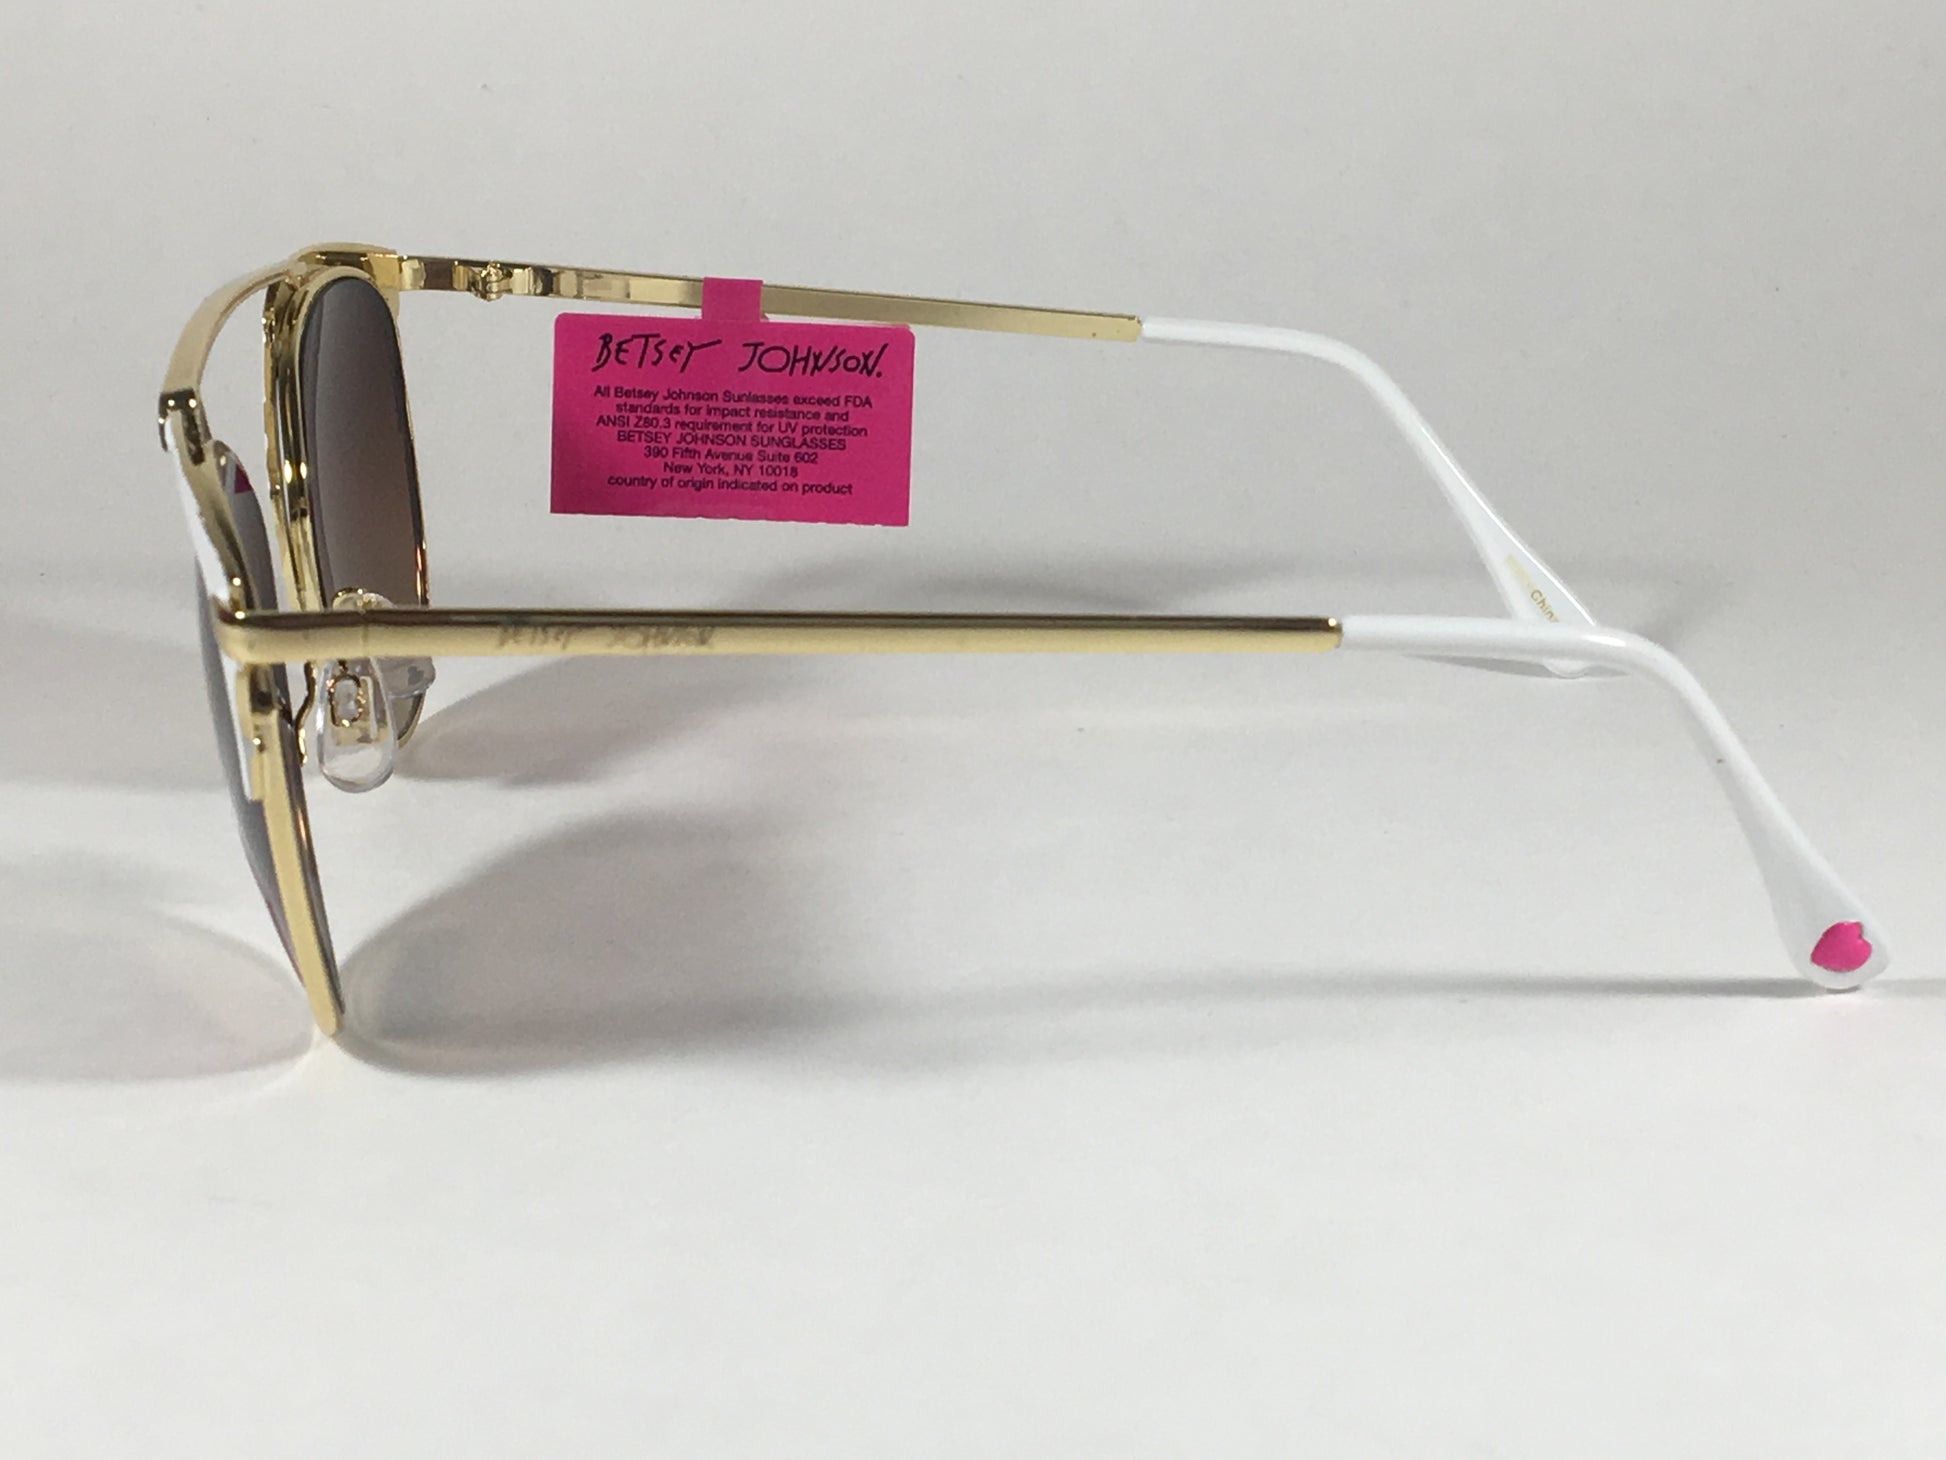 Betsey Johnson Womens Brow Sunglasses Gold White Brown Gradient Retro Bj475114 - Sunglasses